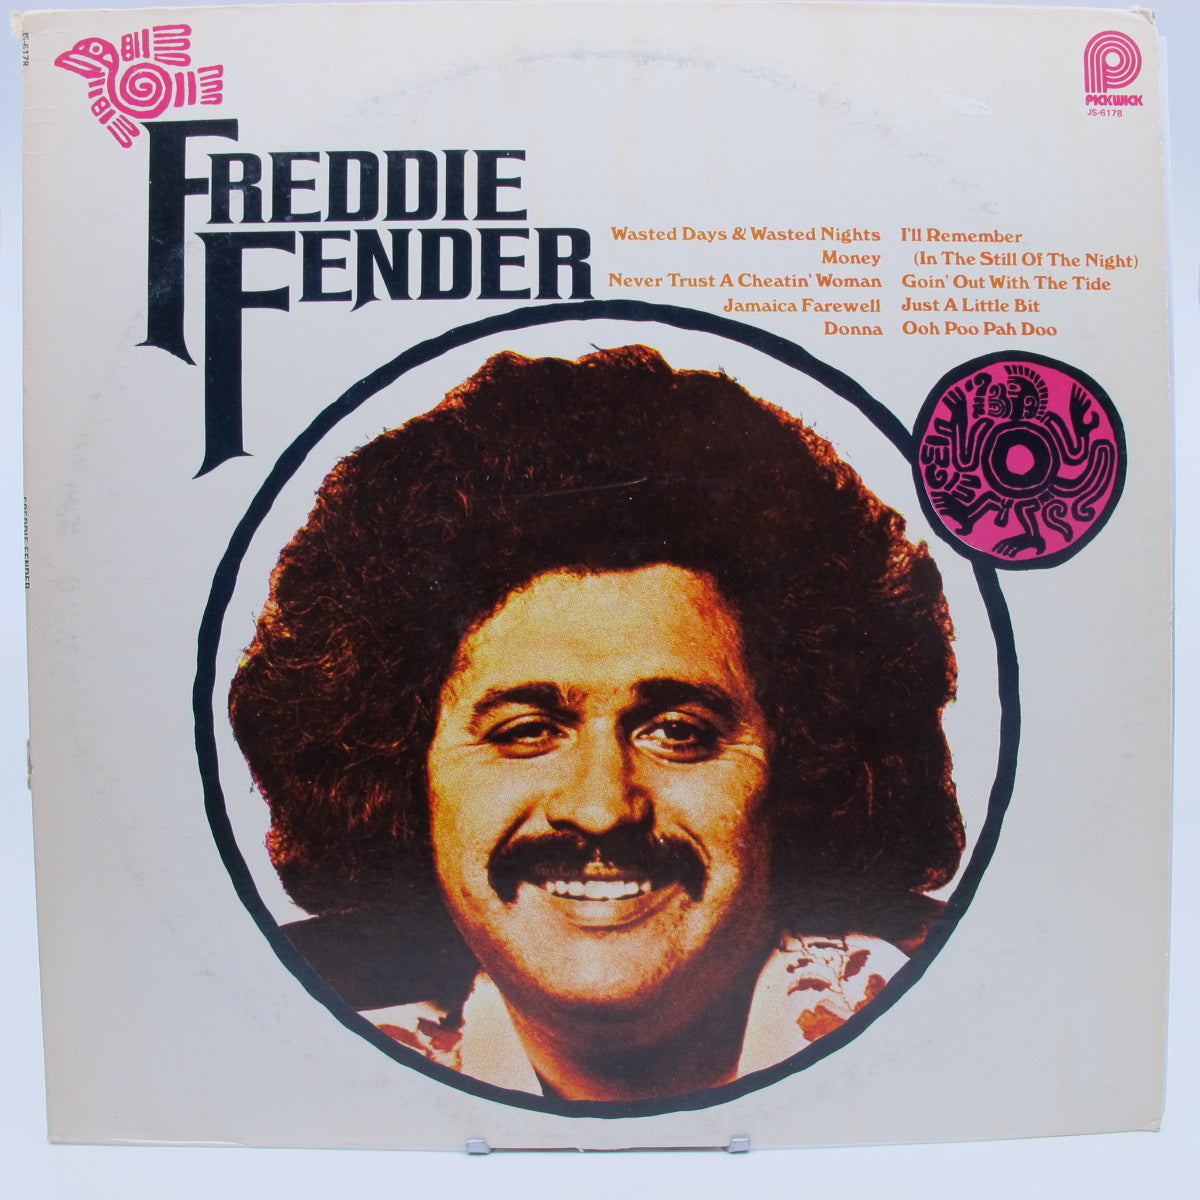 Freddy Fender (2) - The Story Of An "Overnight Sensation" (Notuð plata VG+)